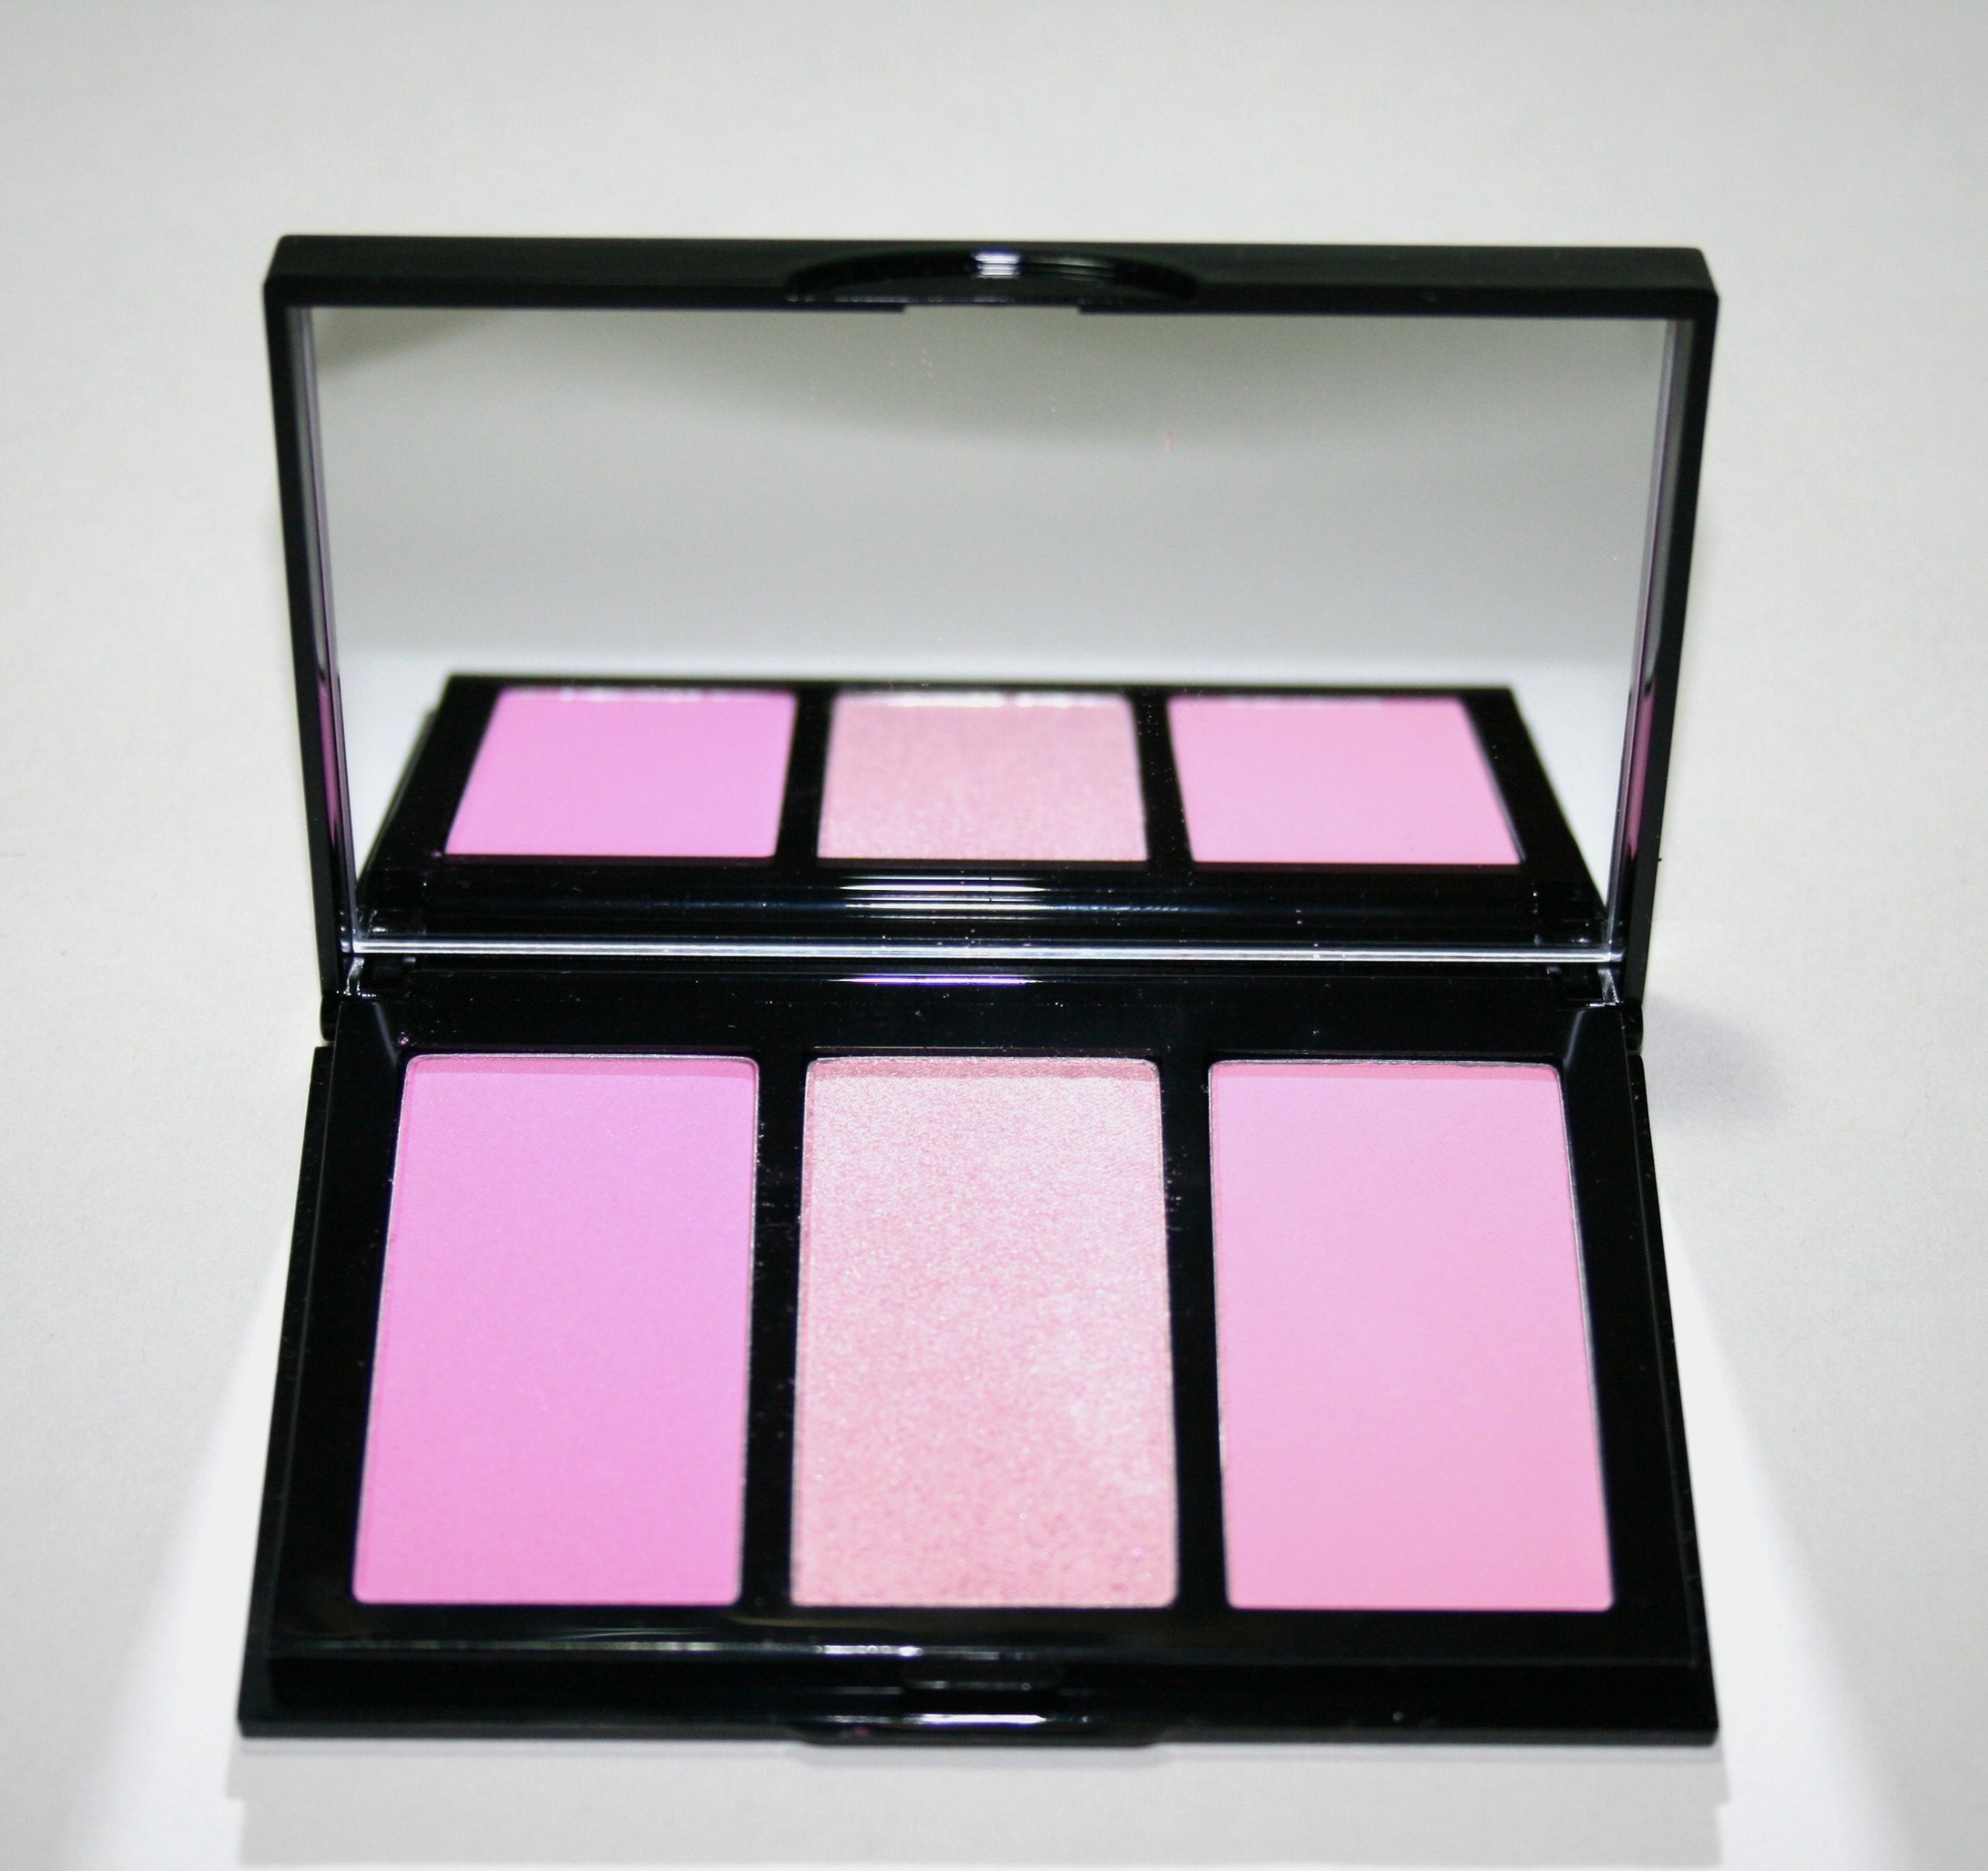 Bobbi Brown Hot Collection Cheek Palette in Pink